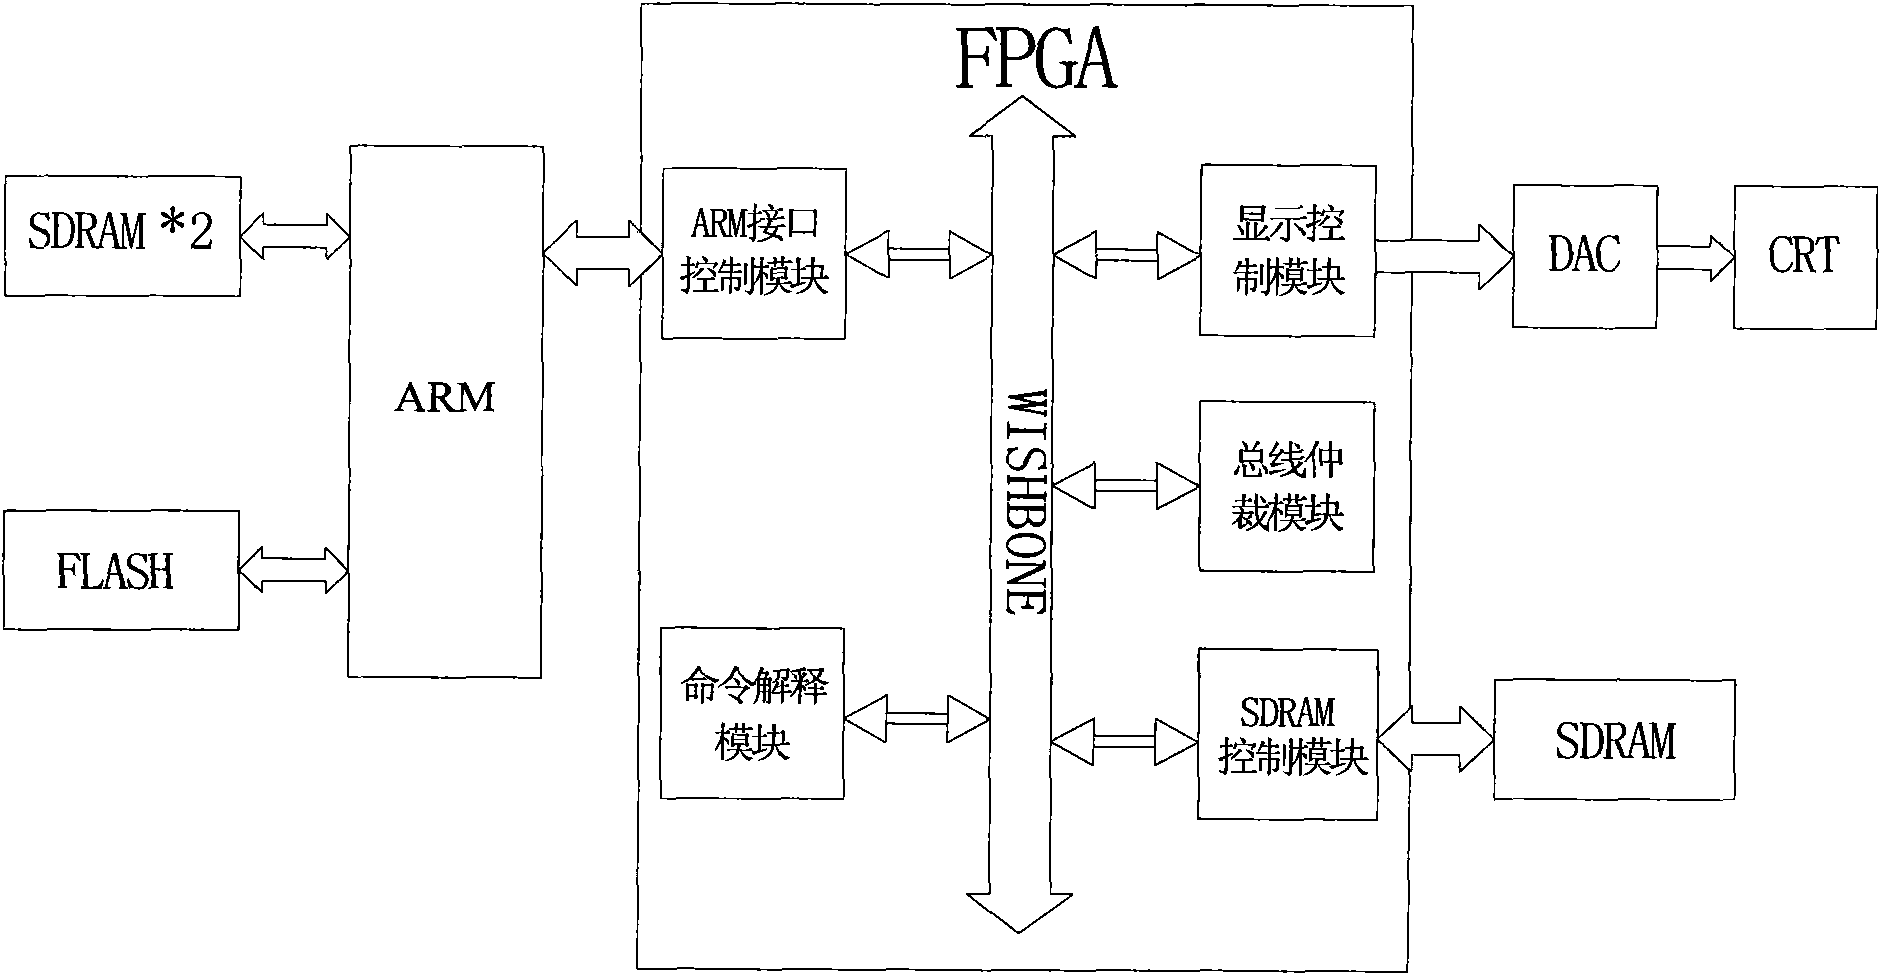 Image processing system based on FPGA